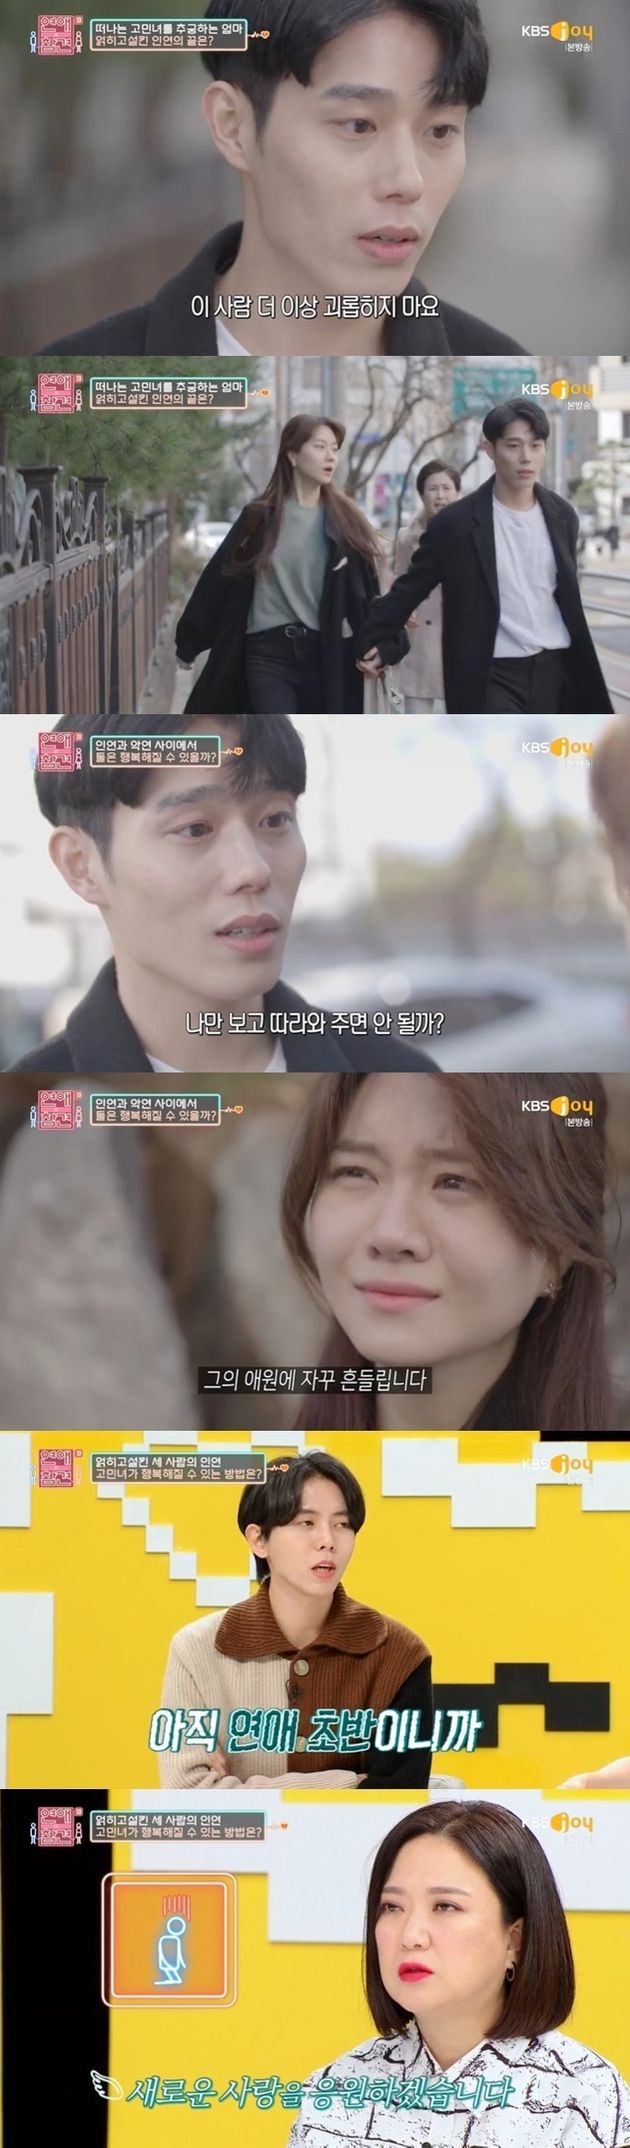 KBS Joy ‘연애의 참견 시즌3